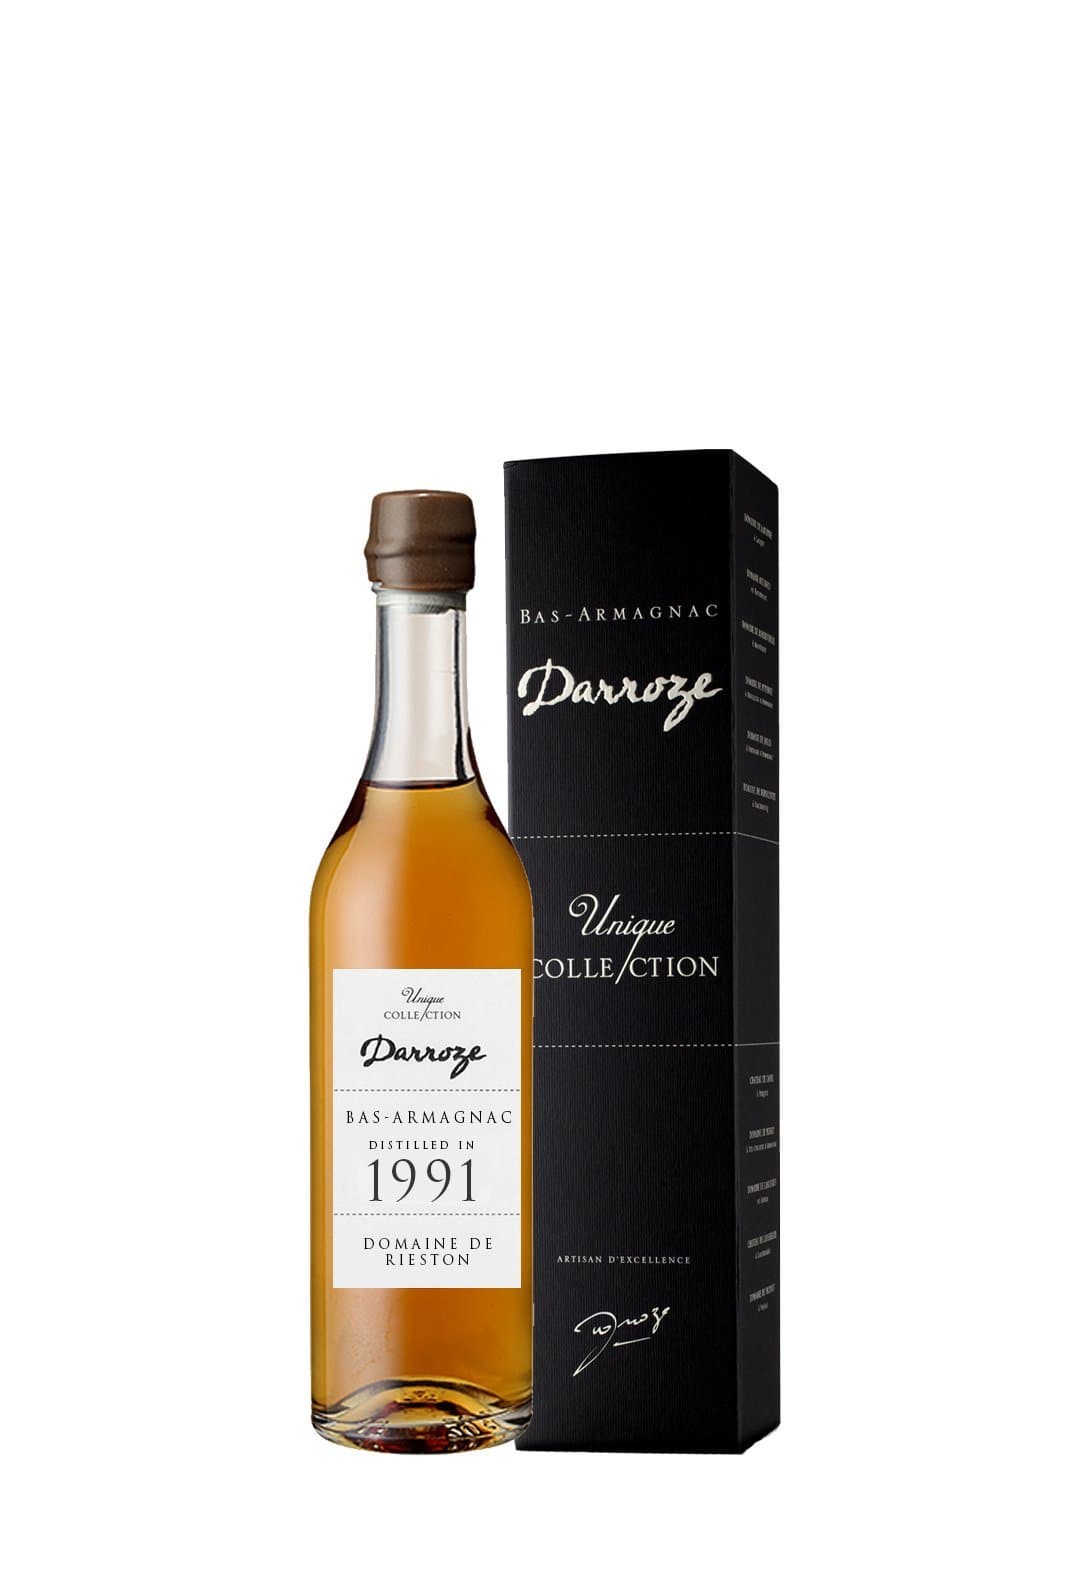 Darroze 1991 Rieston Armagnac 49% 200ml | Brandy | Shop online at Spirits of France